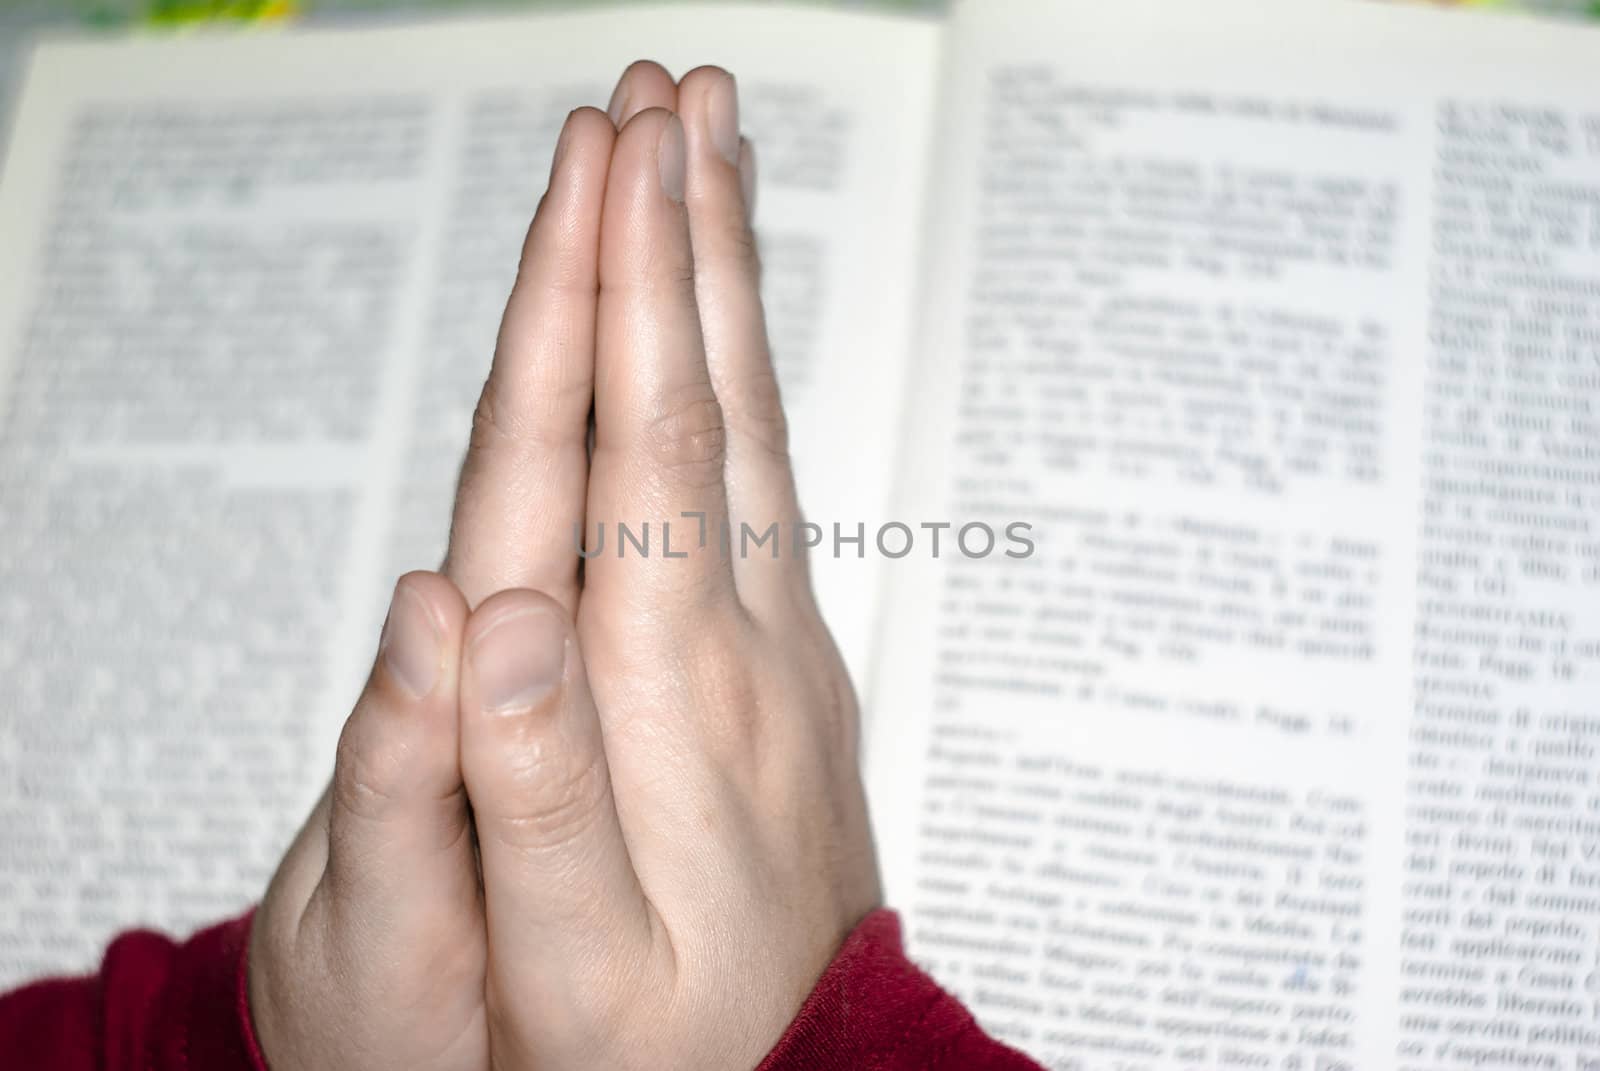 Praying hands by gandolfocannatella